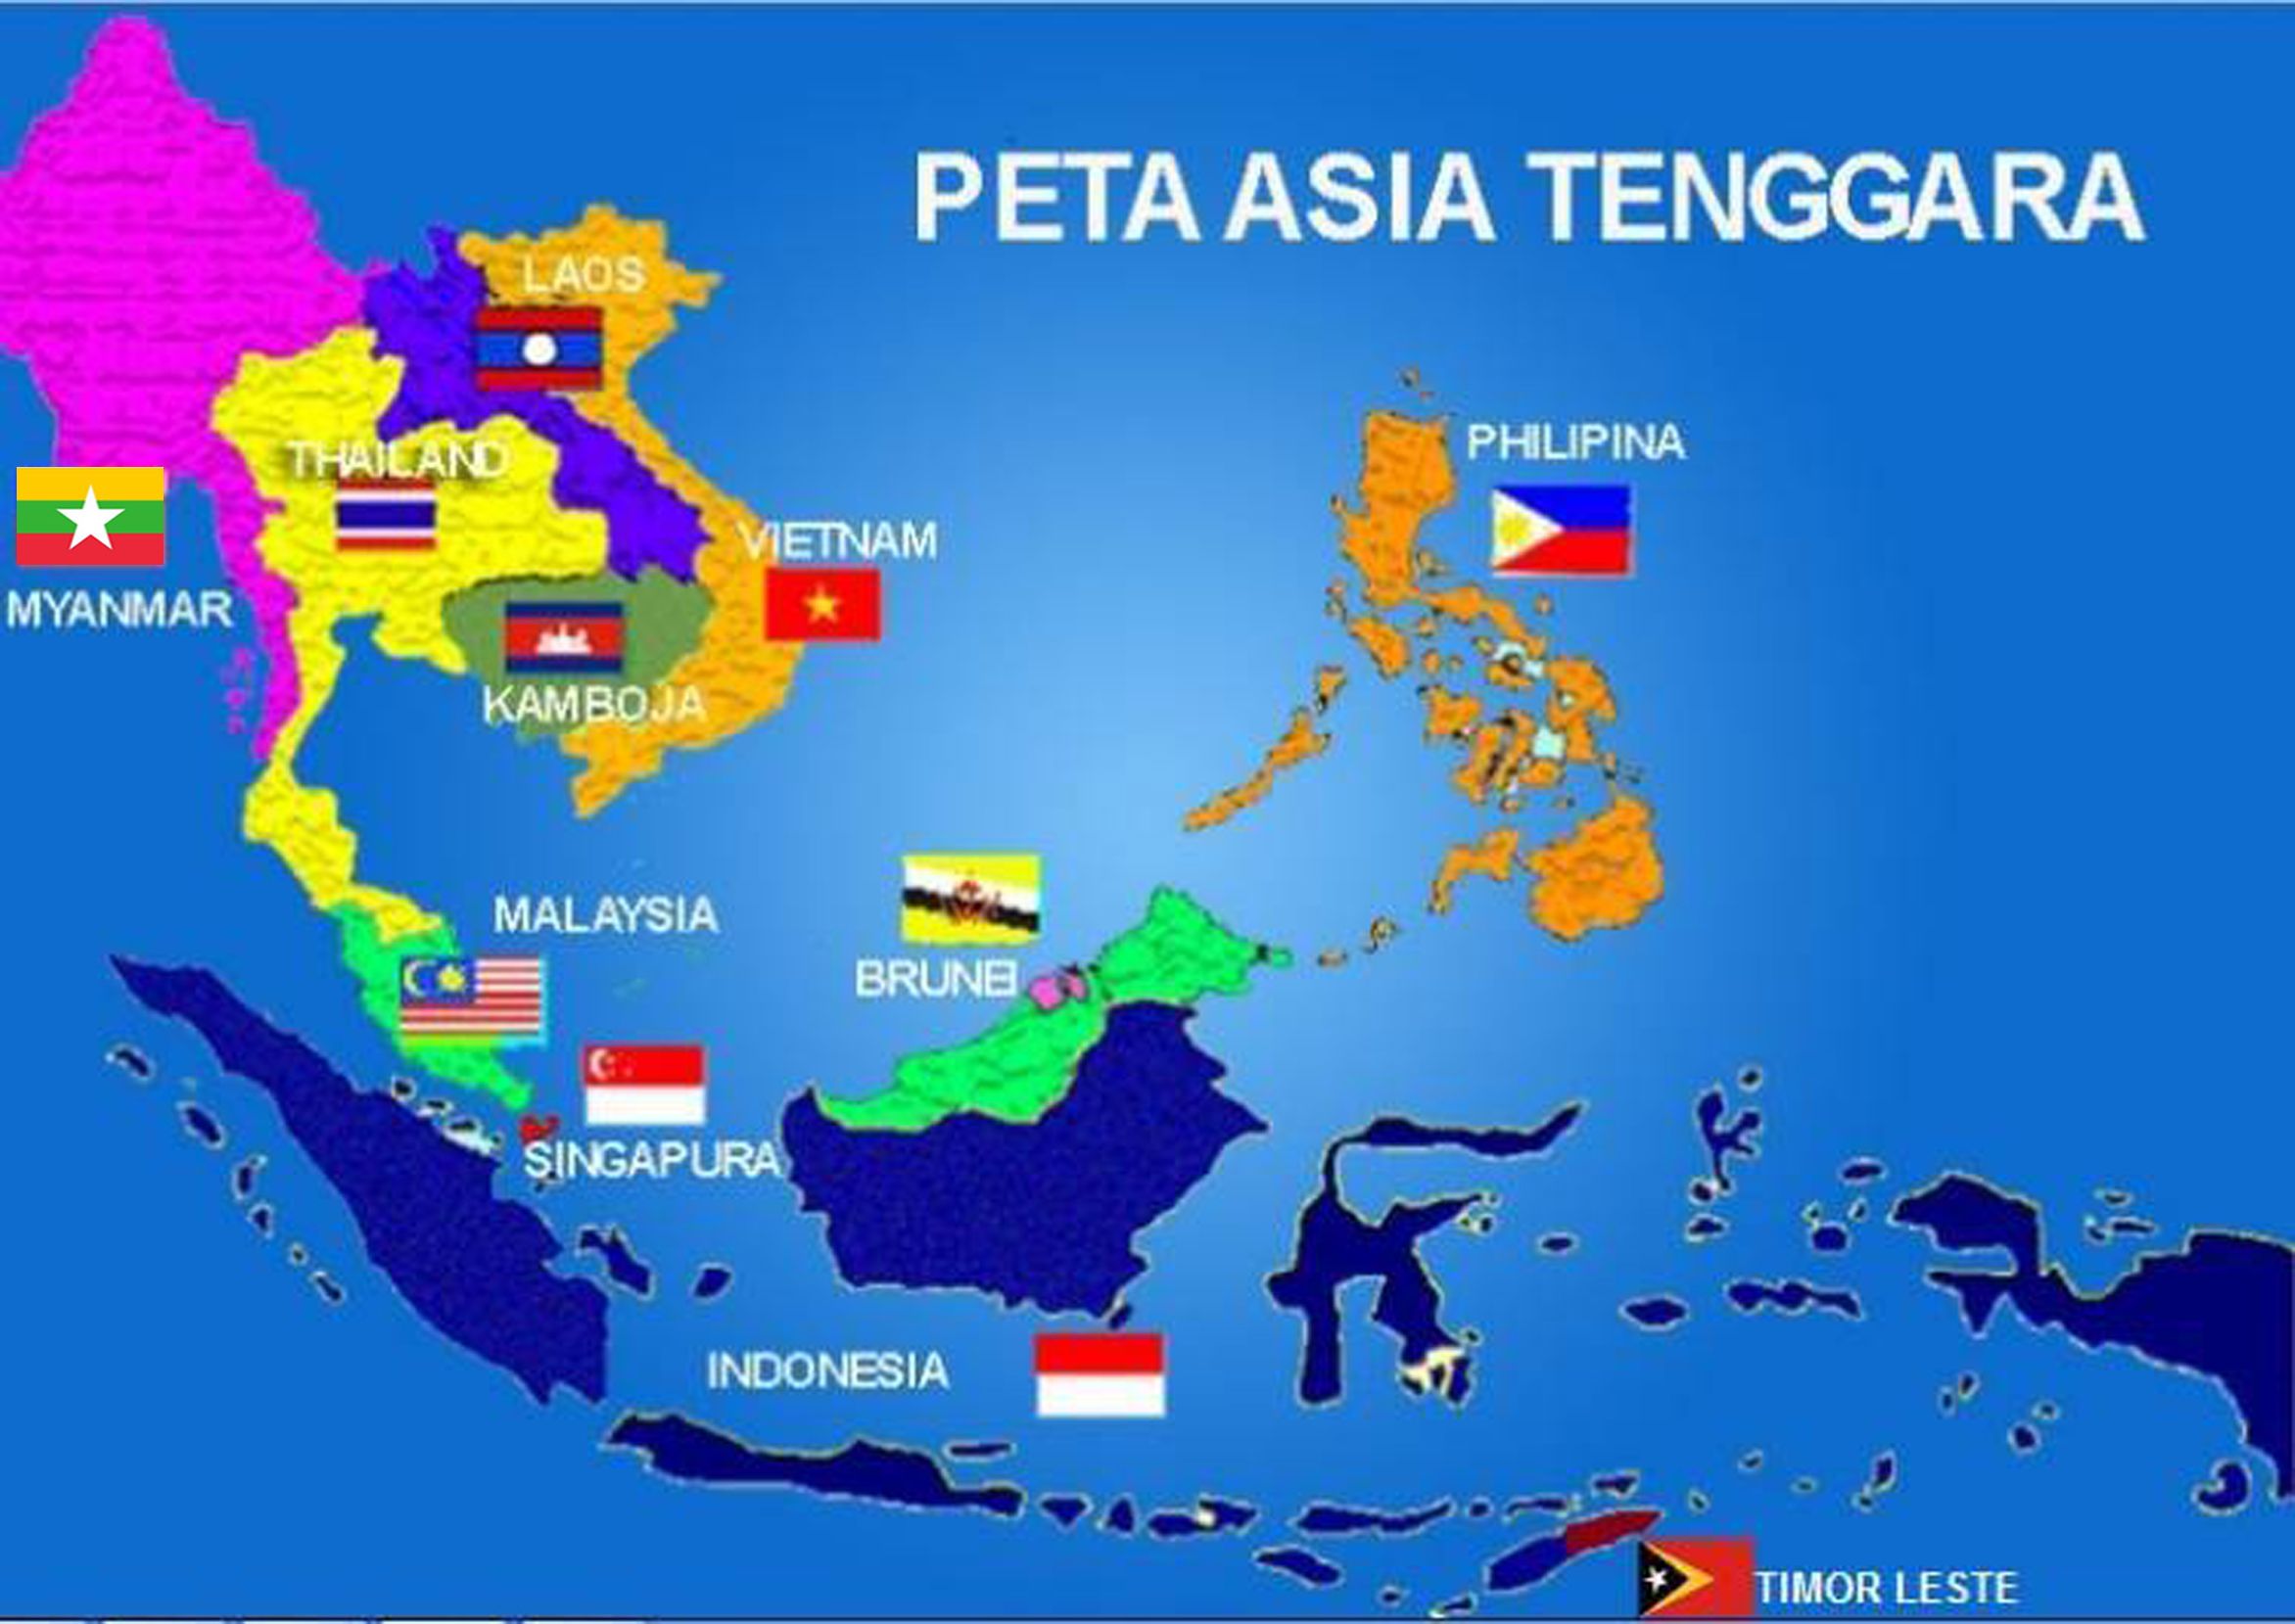 peta asia tenggara 5d1f07290d82302e94498c32